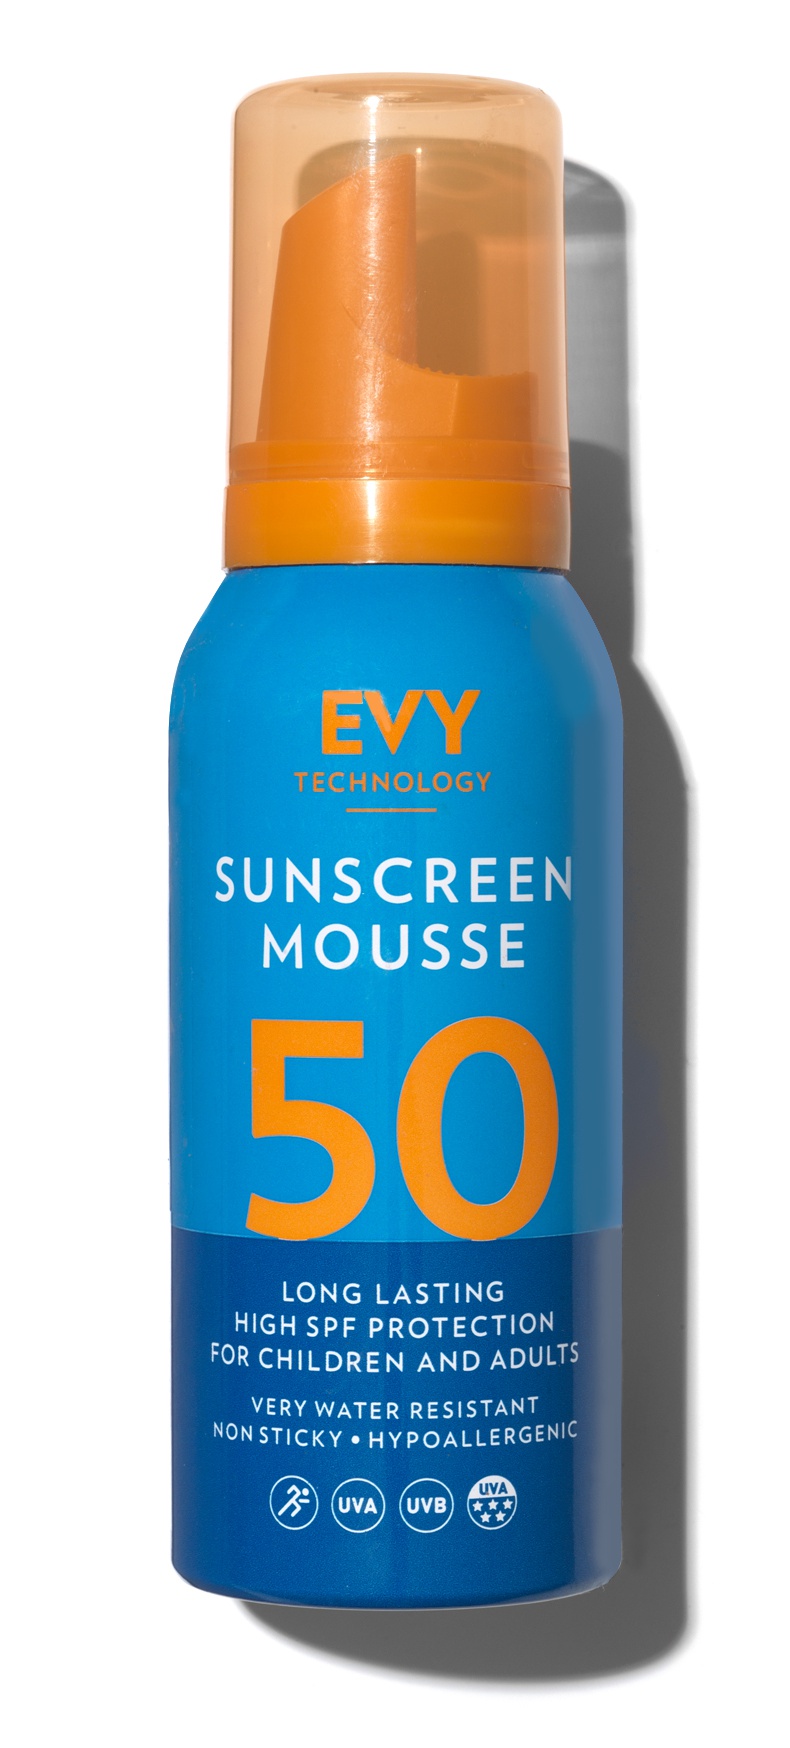 Evy Technology Sunscreen Mousse Spf 50